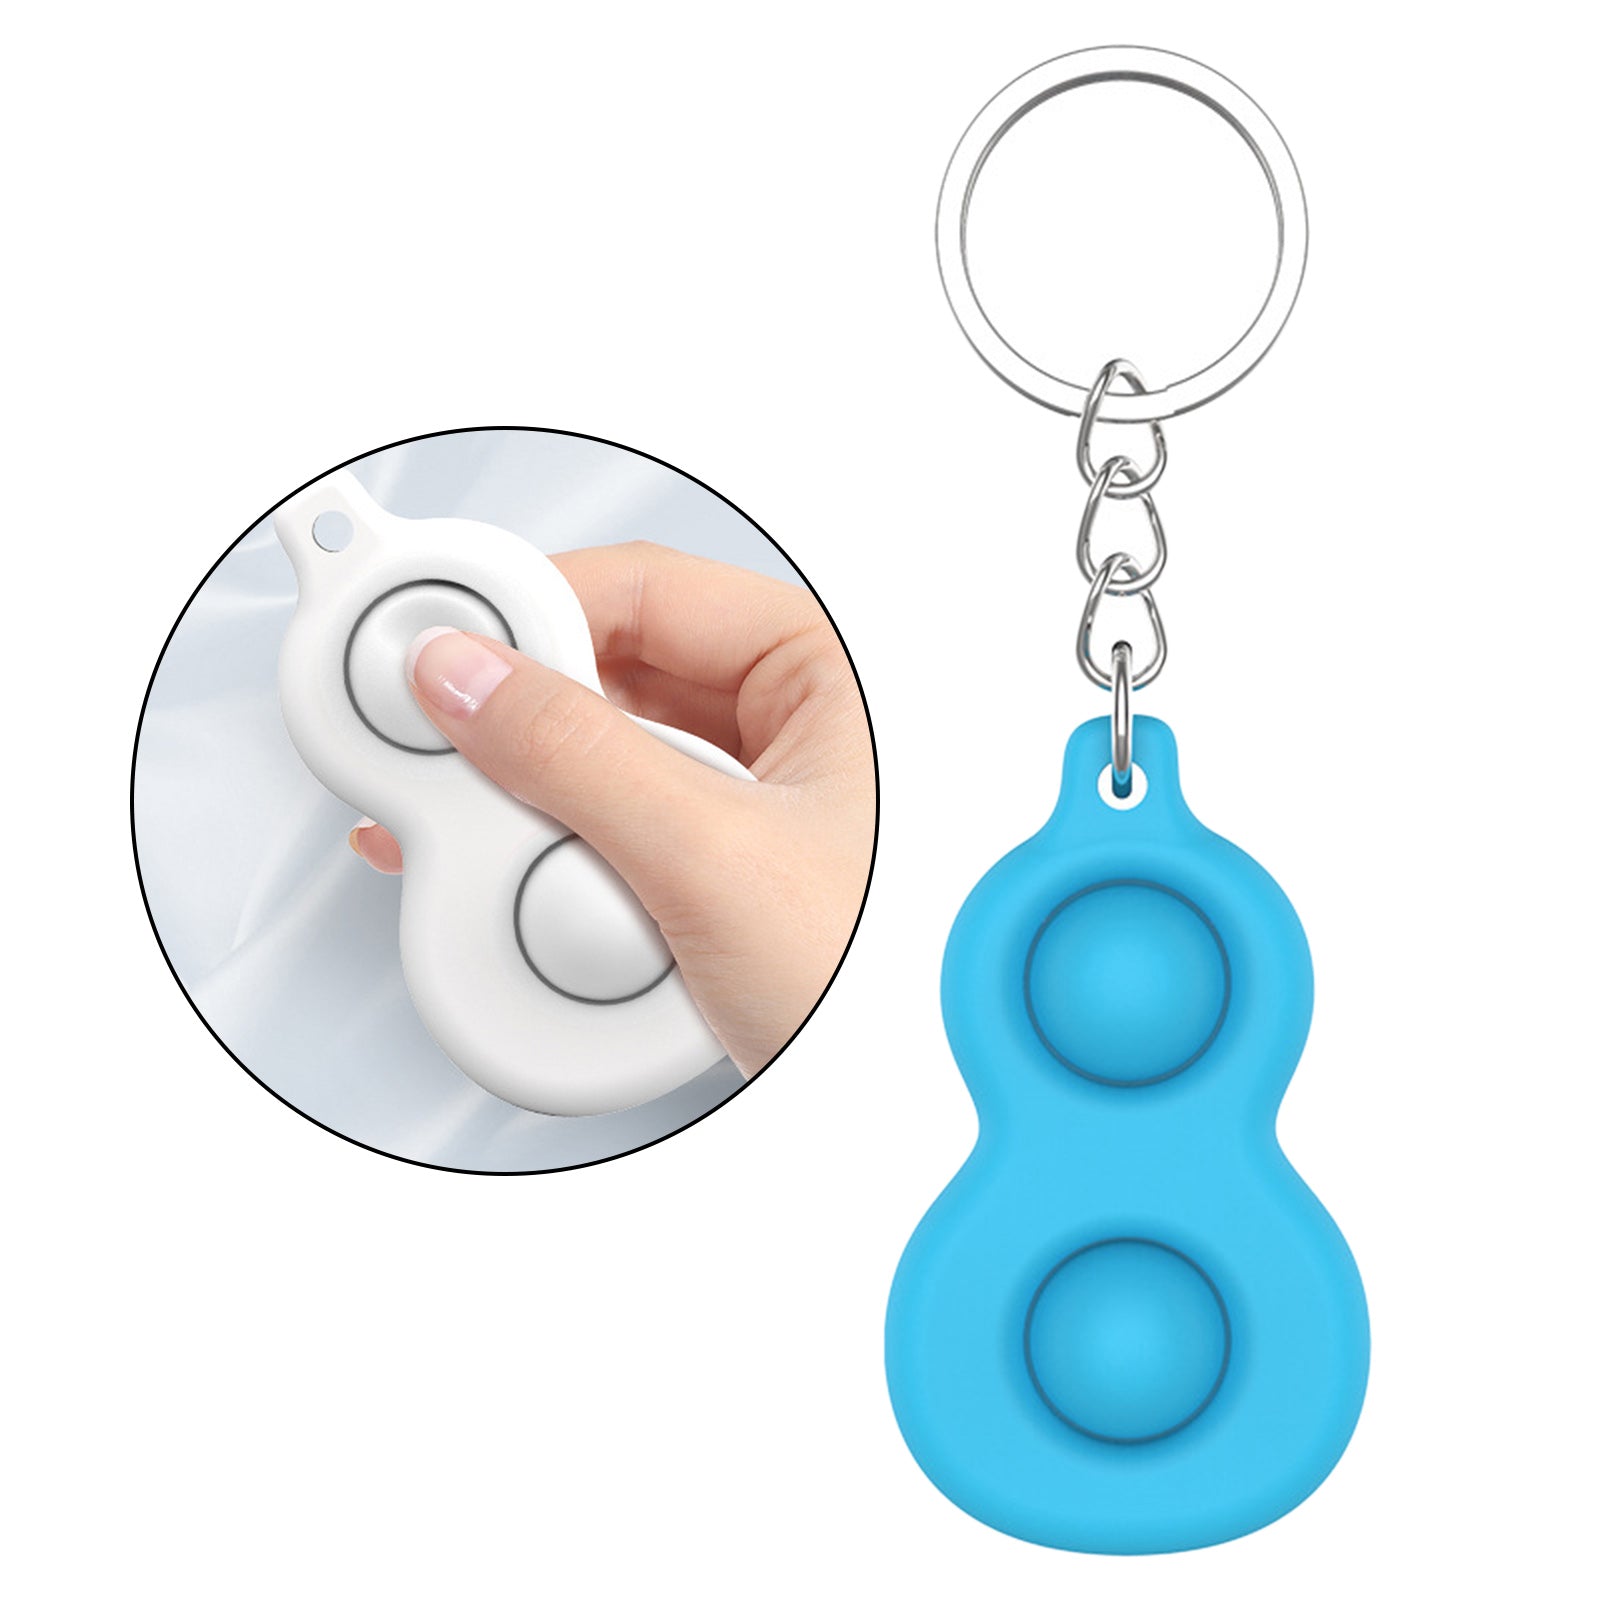 Silicone Fat Brain Toys Fidget Keychain Stress Relief Focus Sensory Toy blue